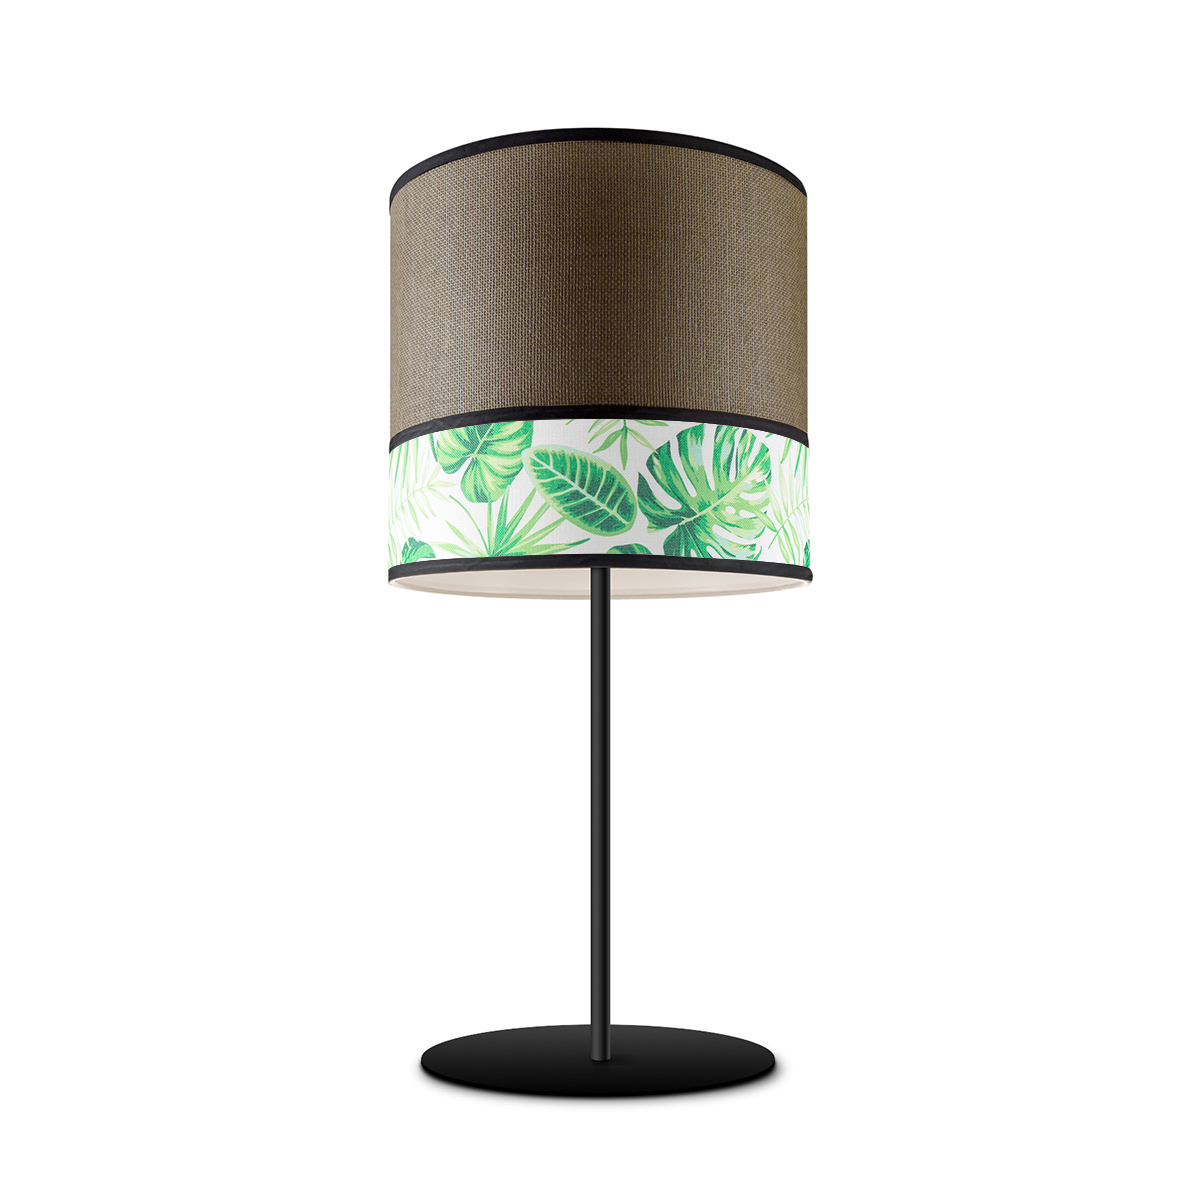 Tangla lighting - TLT7012-25A - Table lamp 1 Light - metal + paper + TC fabric - spring - dark leaf - E27